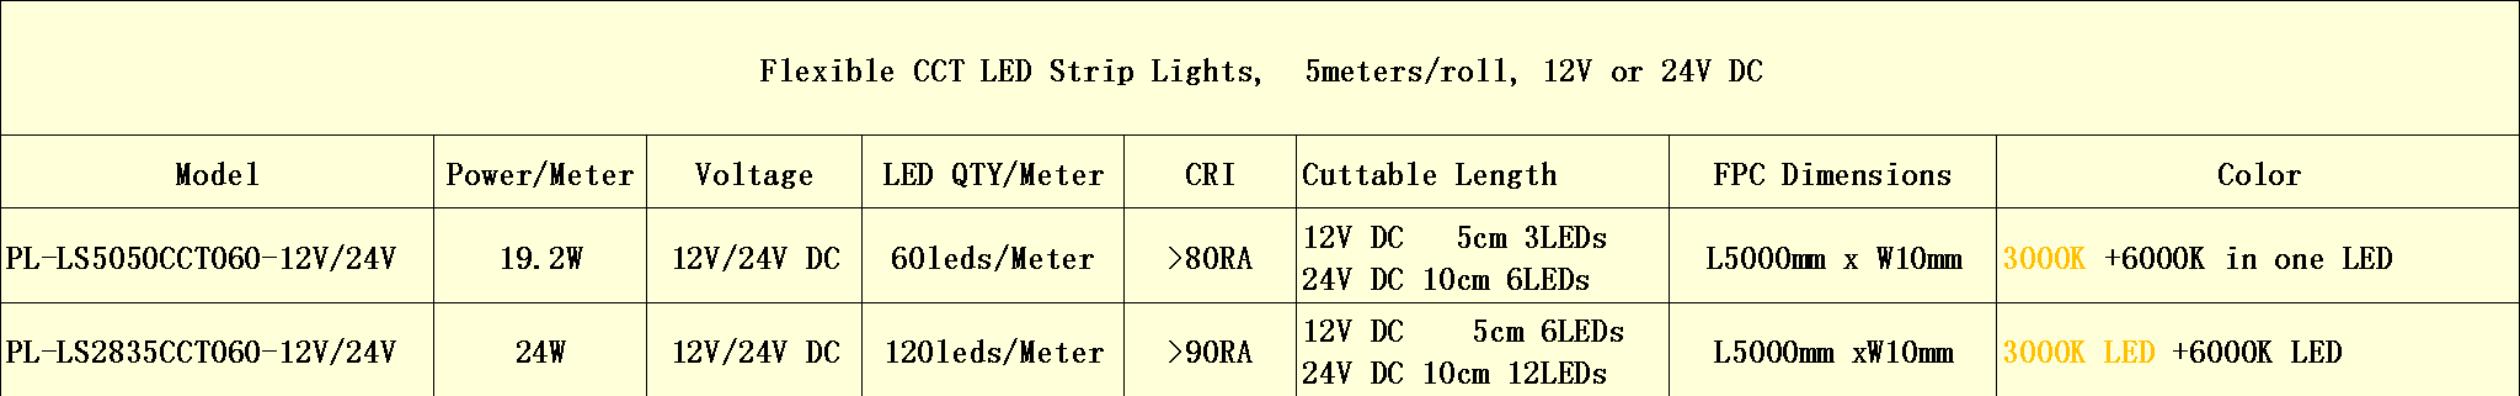 cct led flexible strip lights